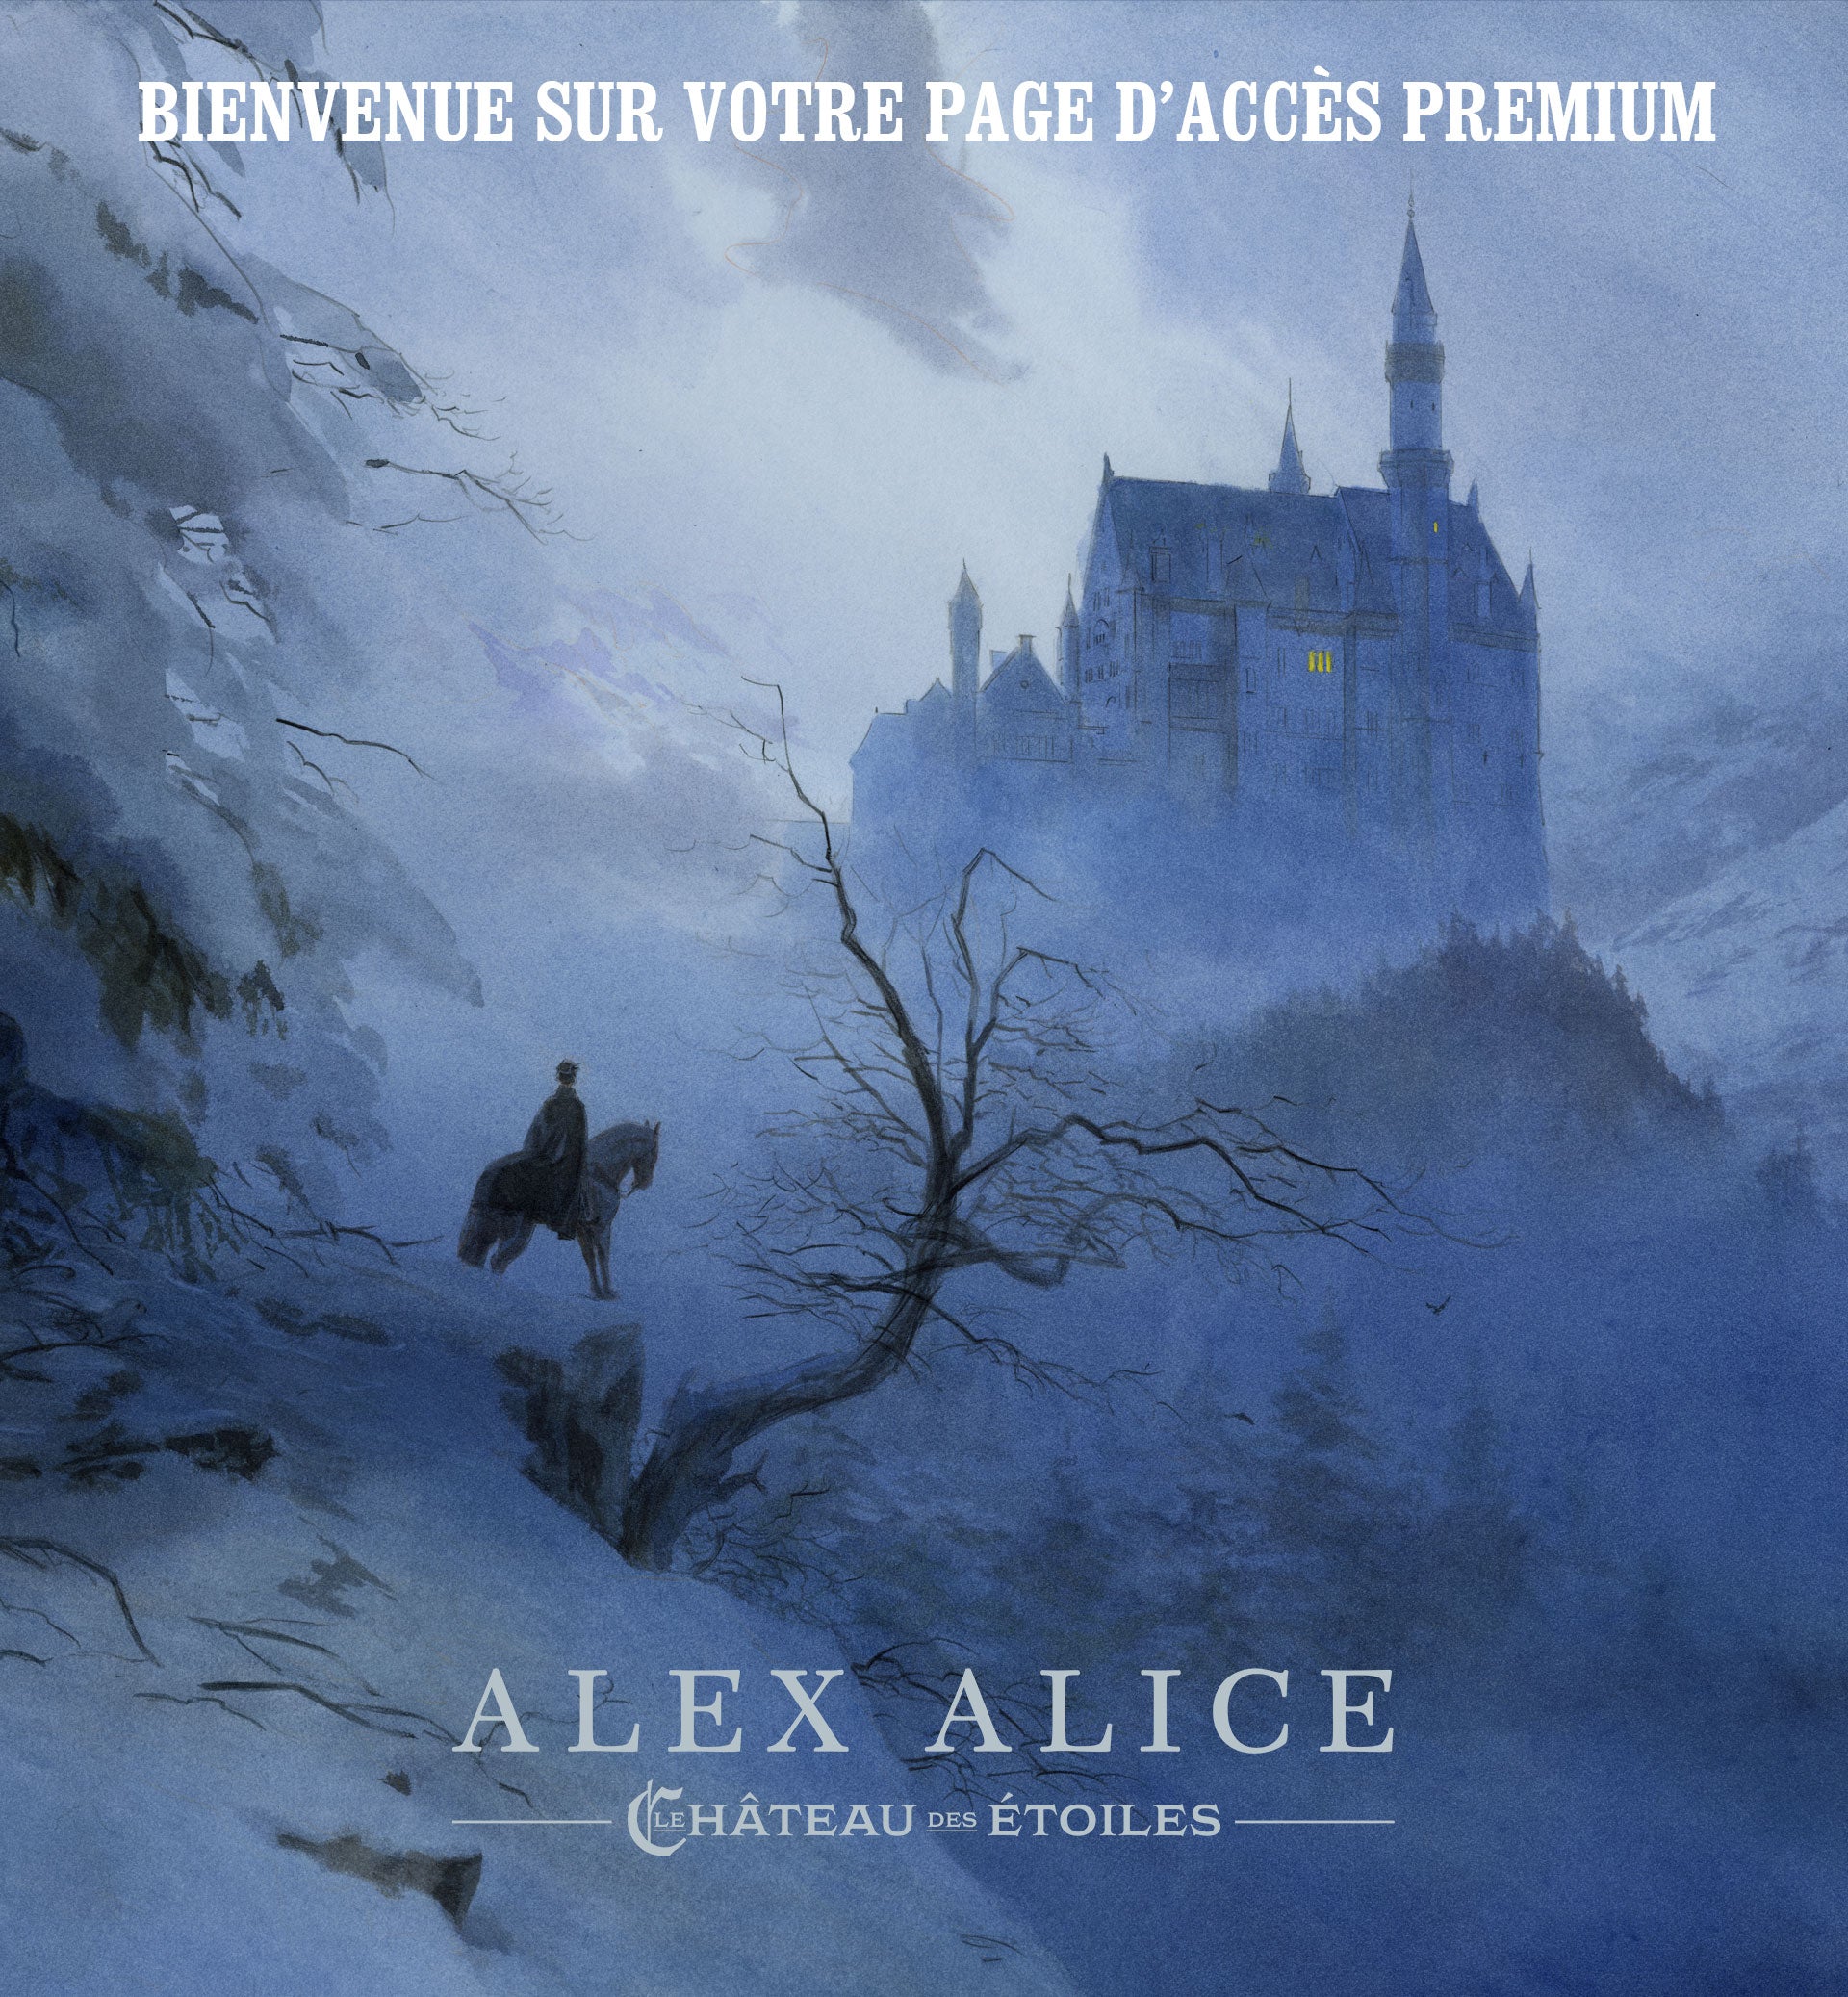 alex alice premium page